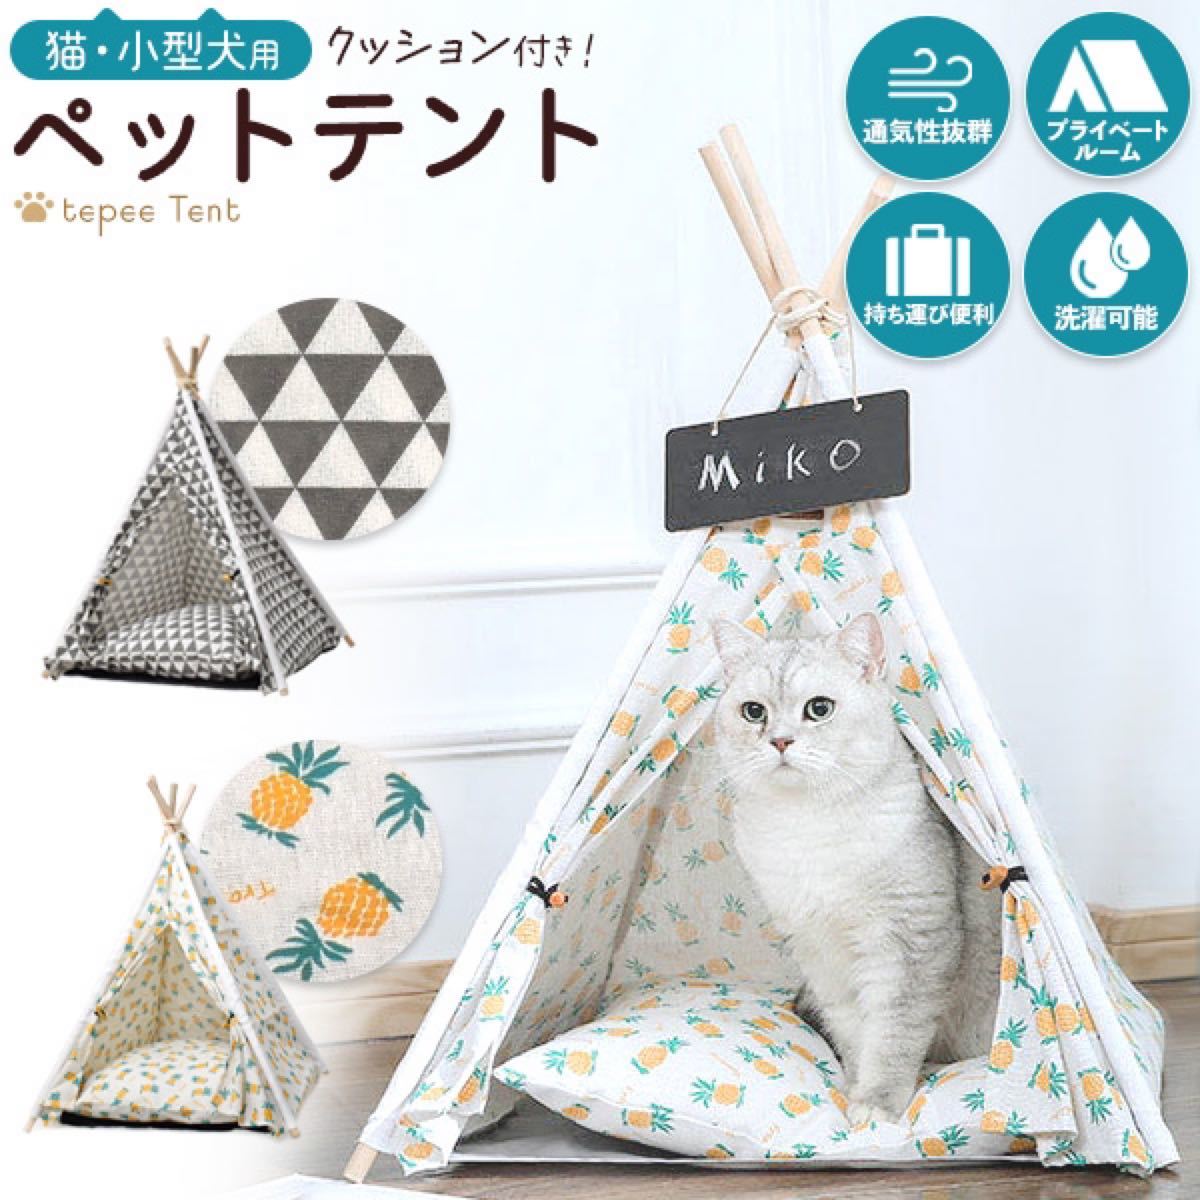 Paypayフリマ ペットテント クッション付き 猫 小型犬用猫 用品 おしゃれ 可愛い 軽量 旅行